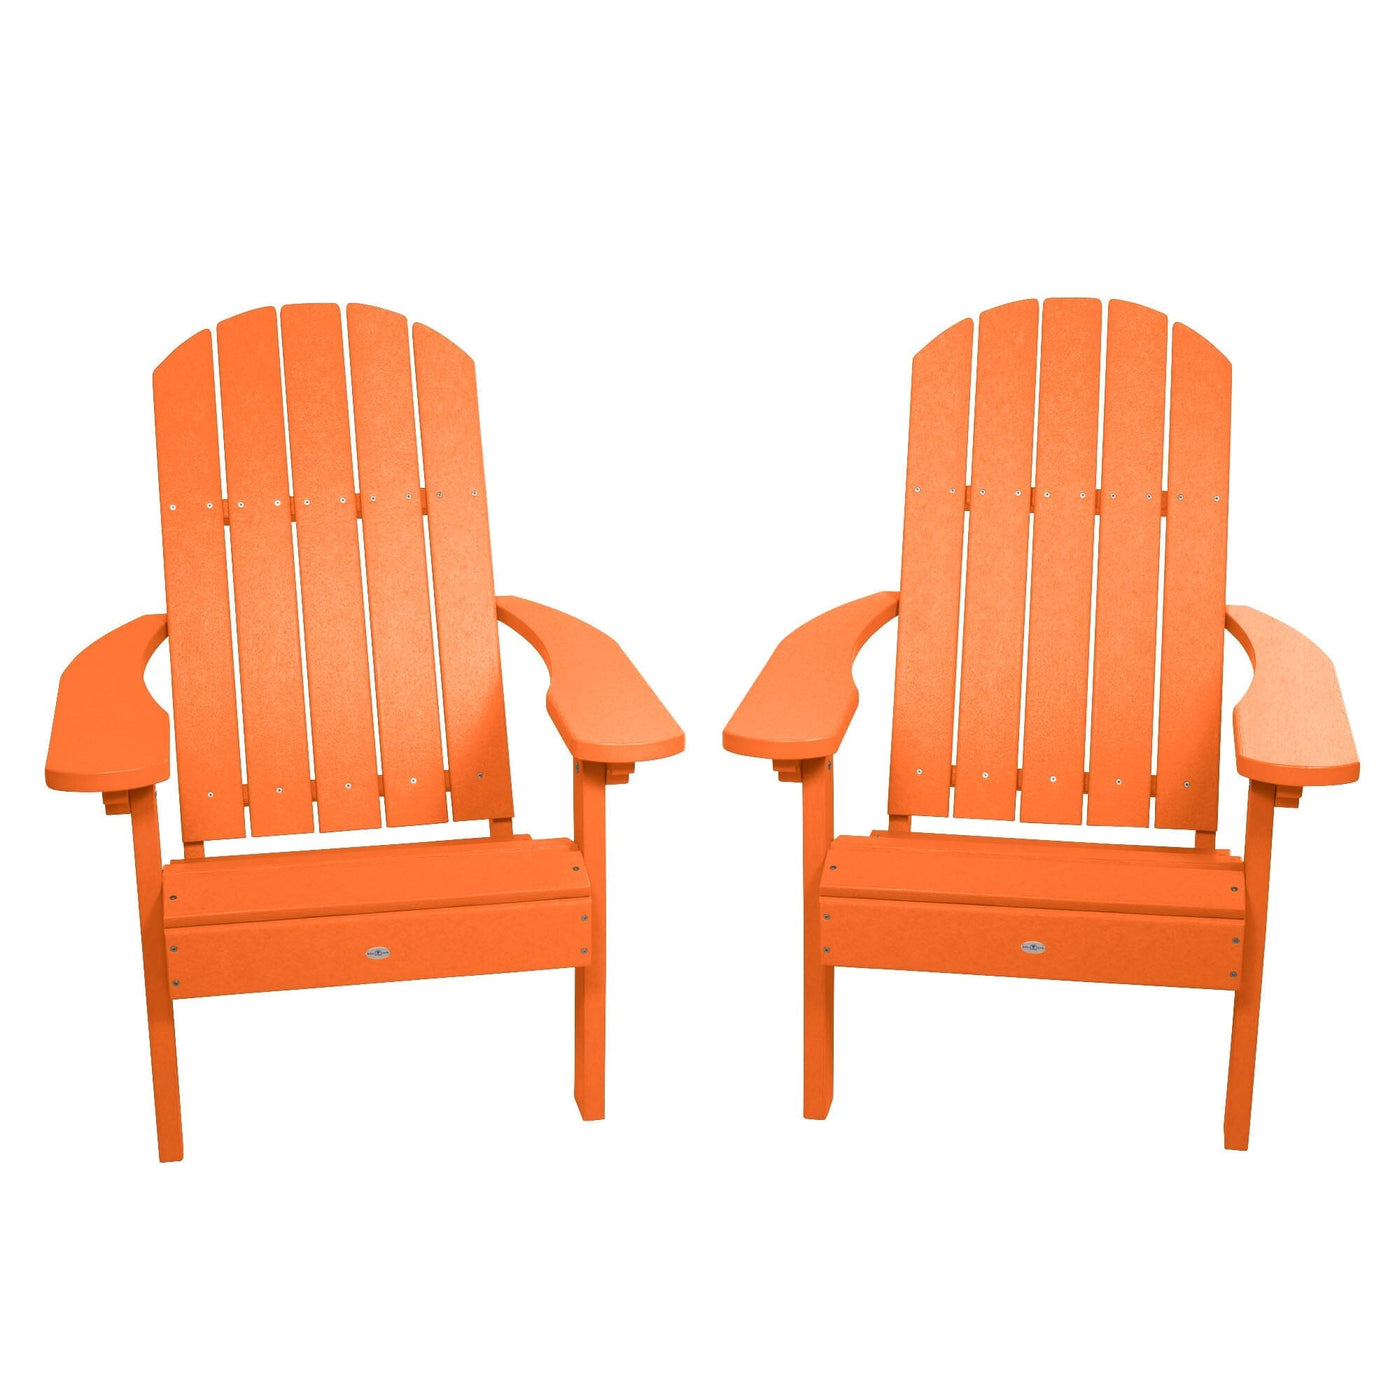 Cape Classic Adirondack Chair (Set of 2) Kitted Set Bahia Verde Outdoors Citrus Orange 